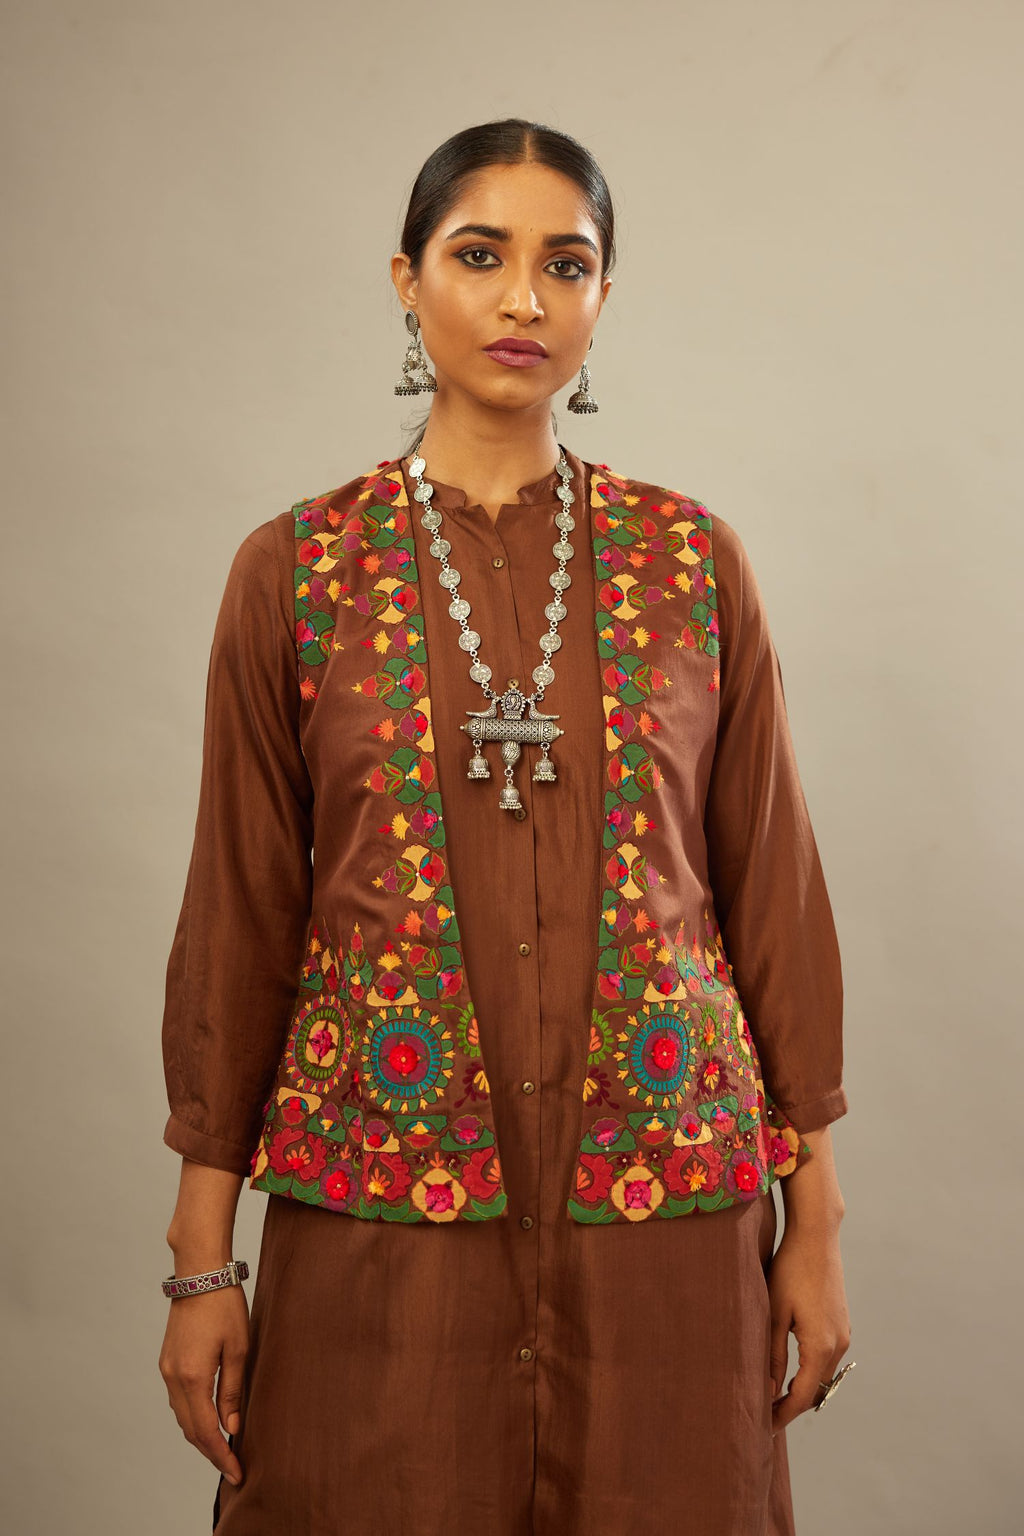 ZAFUL Tribal Print Boho Fur Coat Teddy Coat Ethnic Aztec Cropped Jacket For  Autumn/Winter Fashion HKD230727 From Mengqiqi05, $29.31 | DHgate.Com